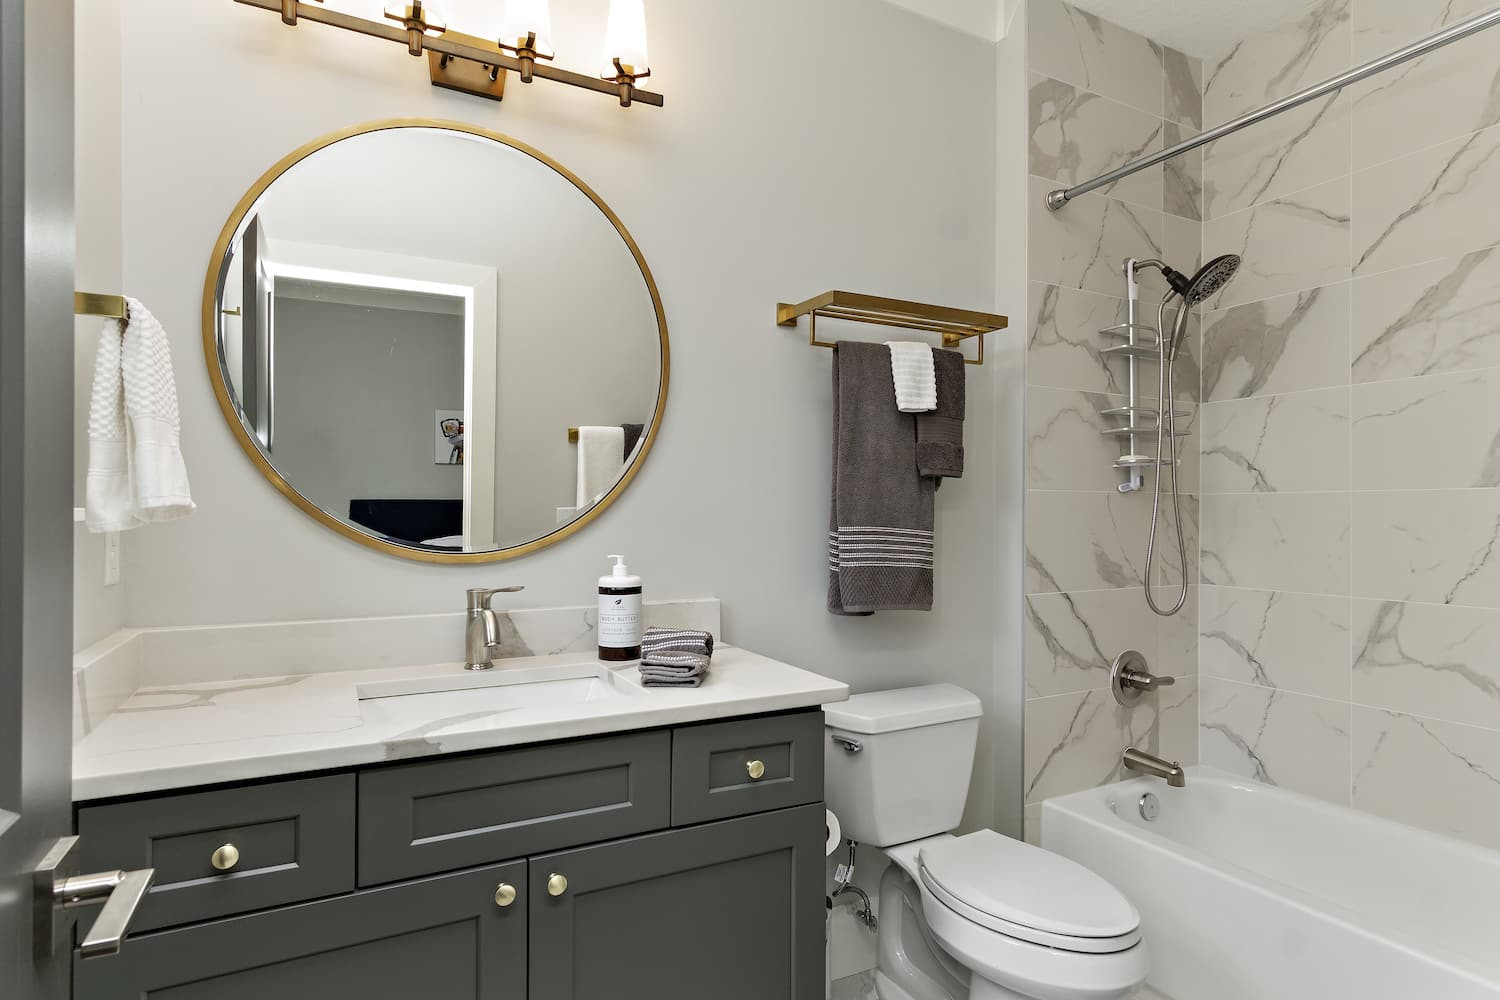 Dazzling Bathroom Mirror Ideas